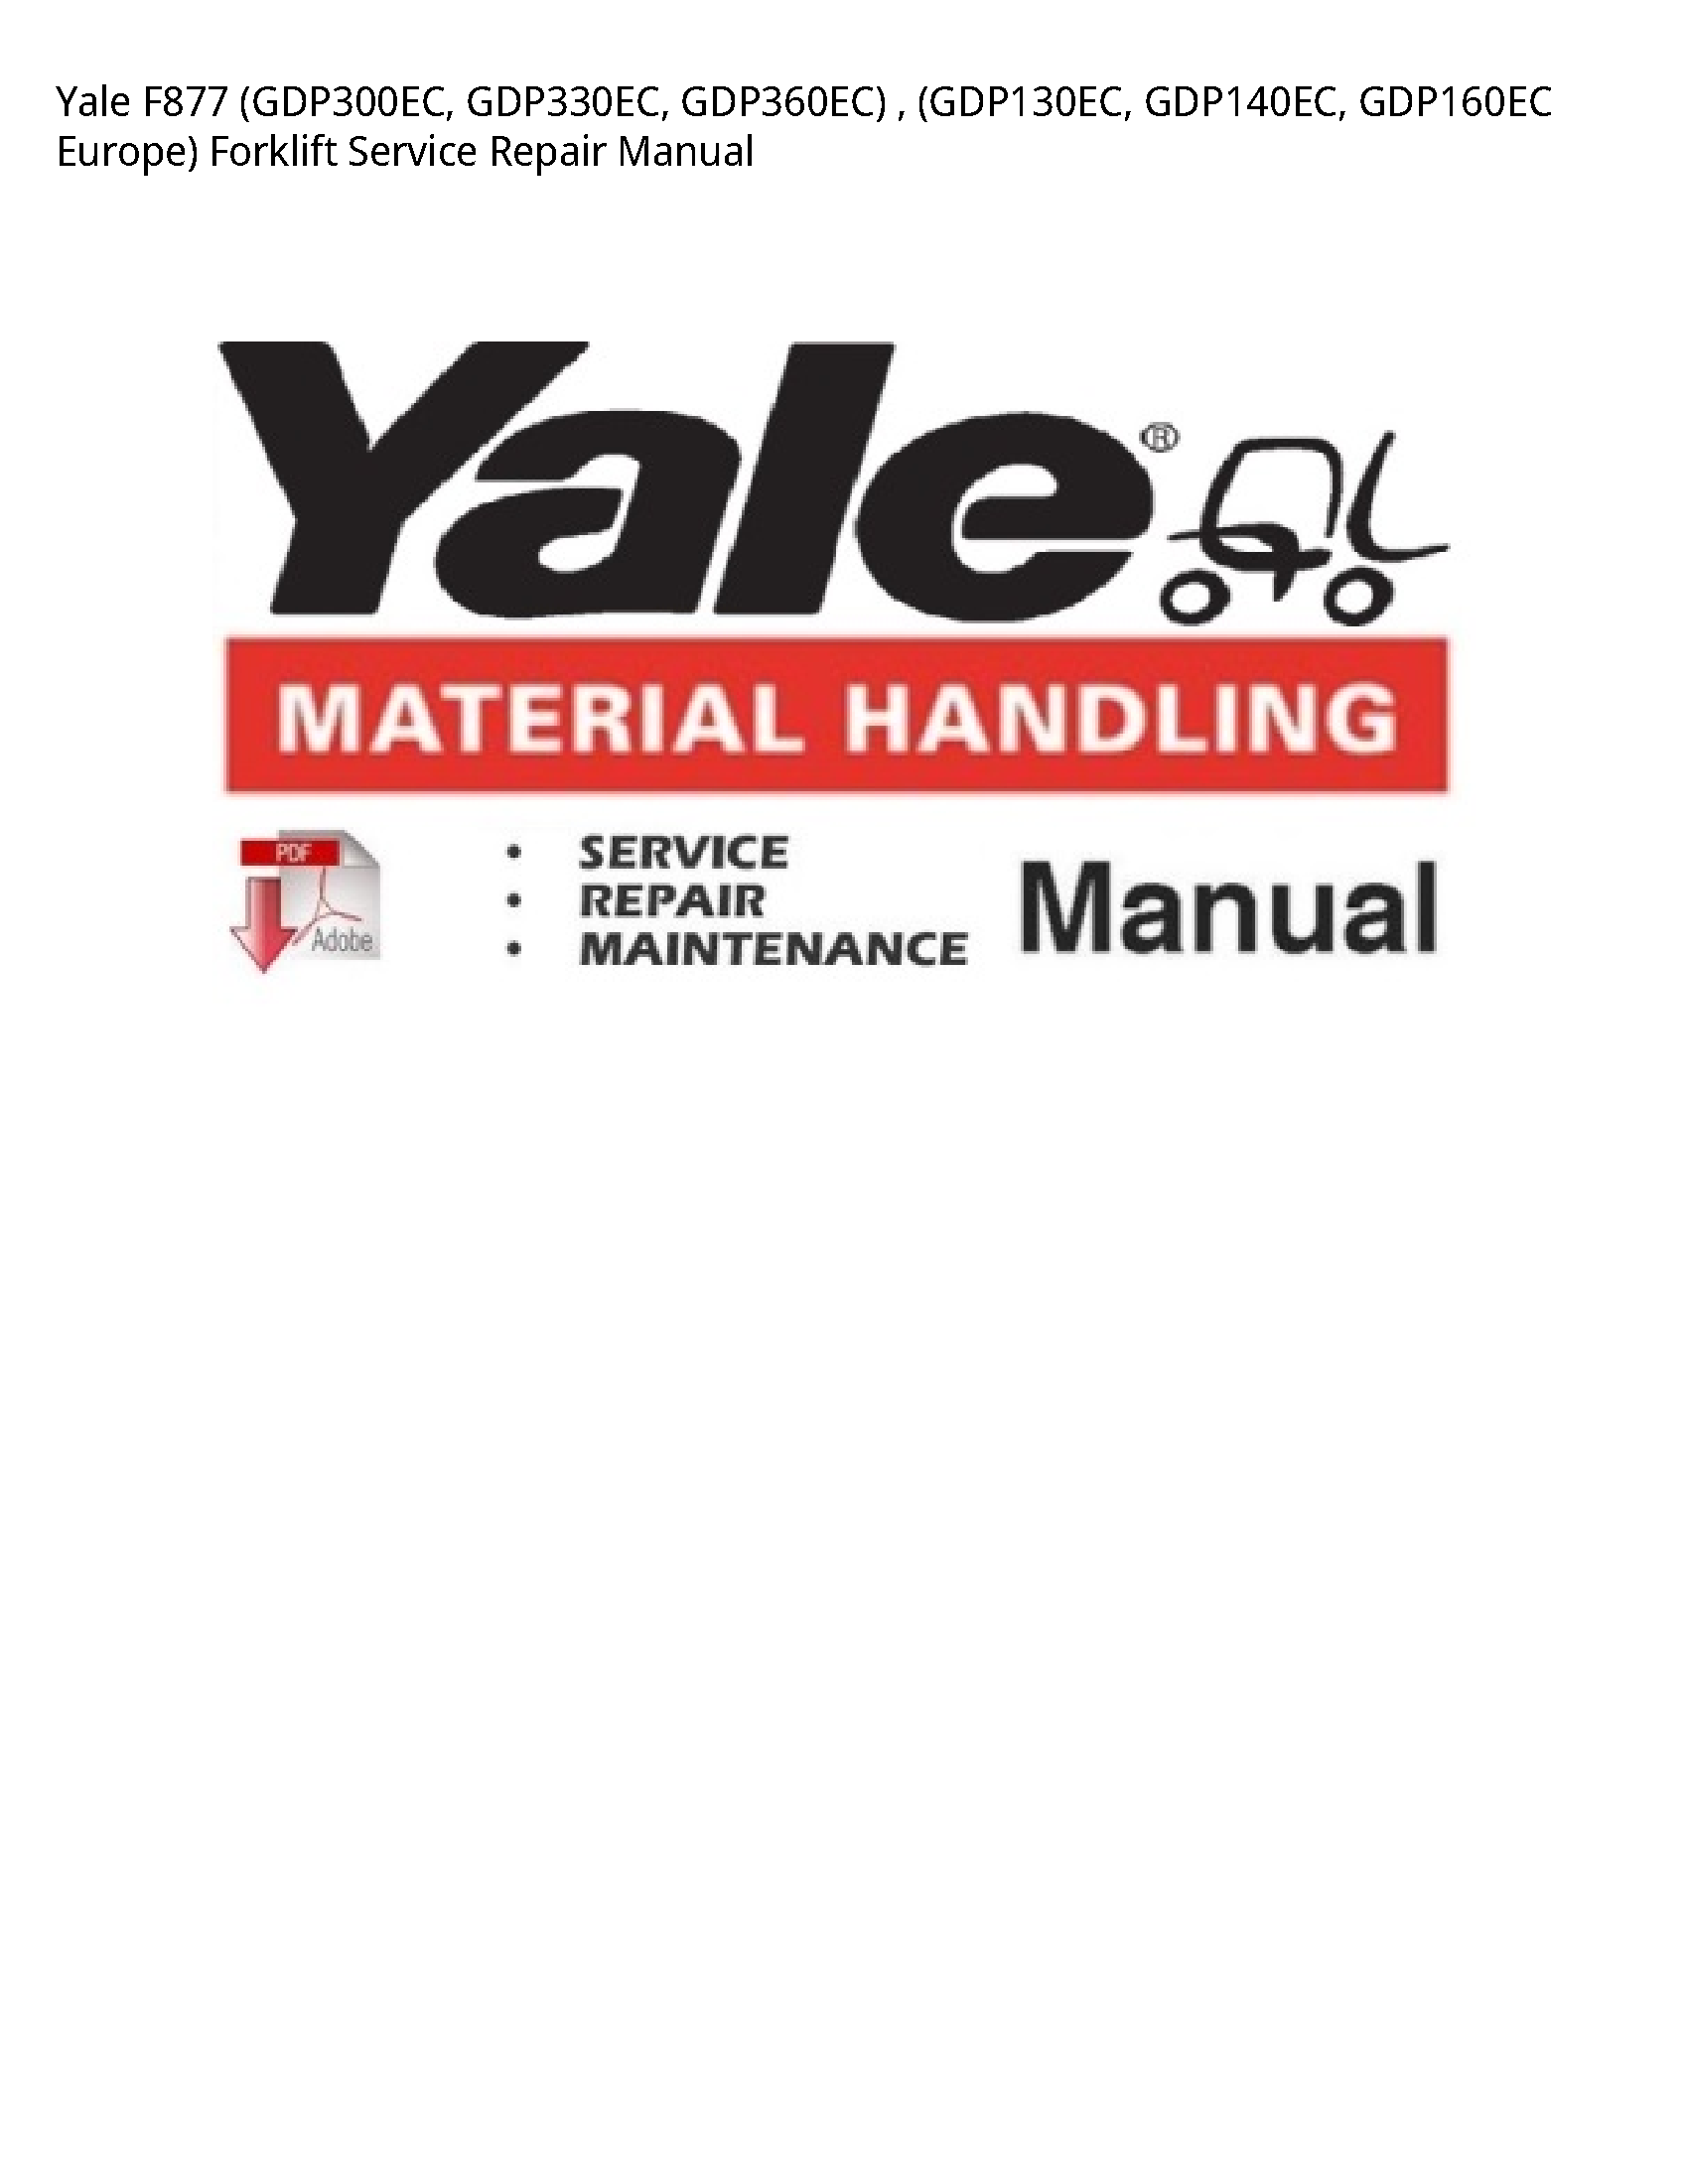 Yale F877 Europe) Forklift manual